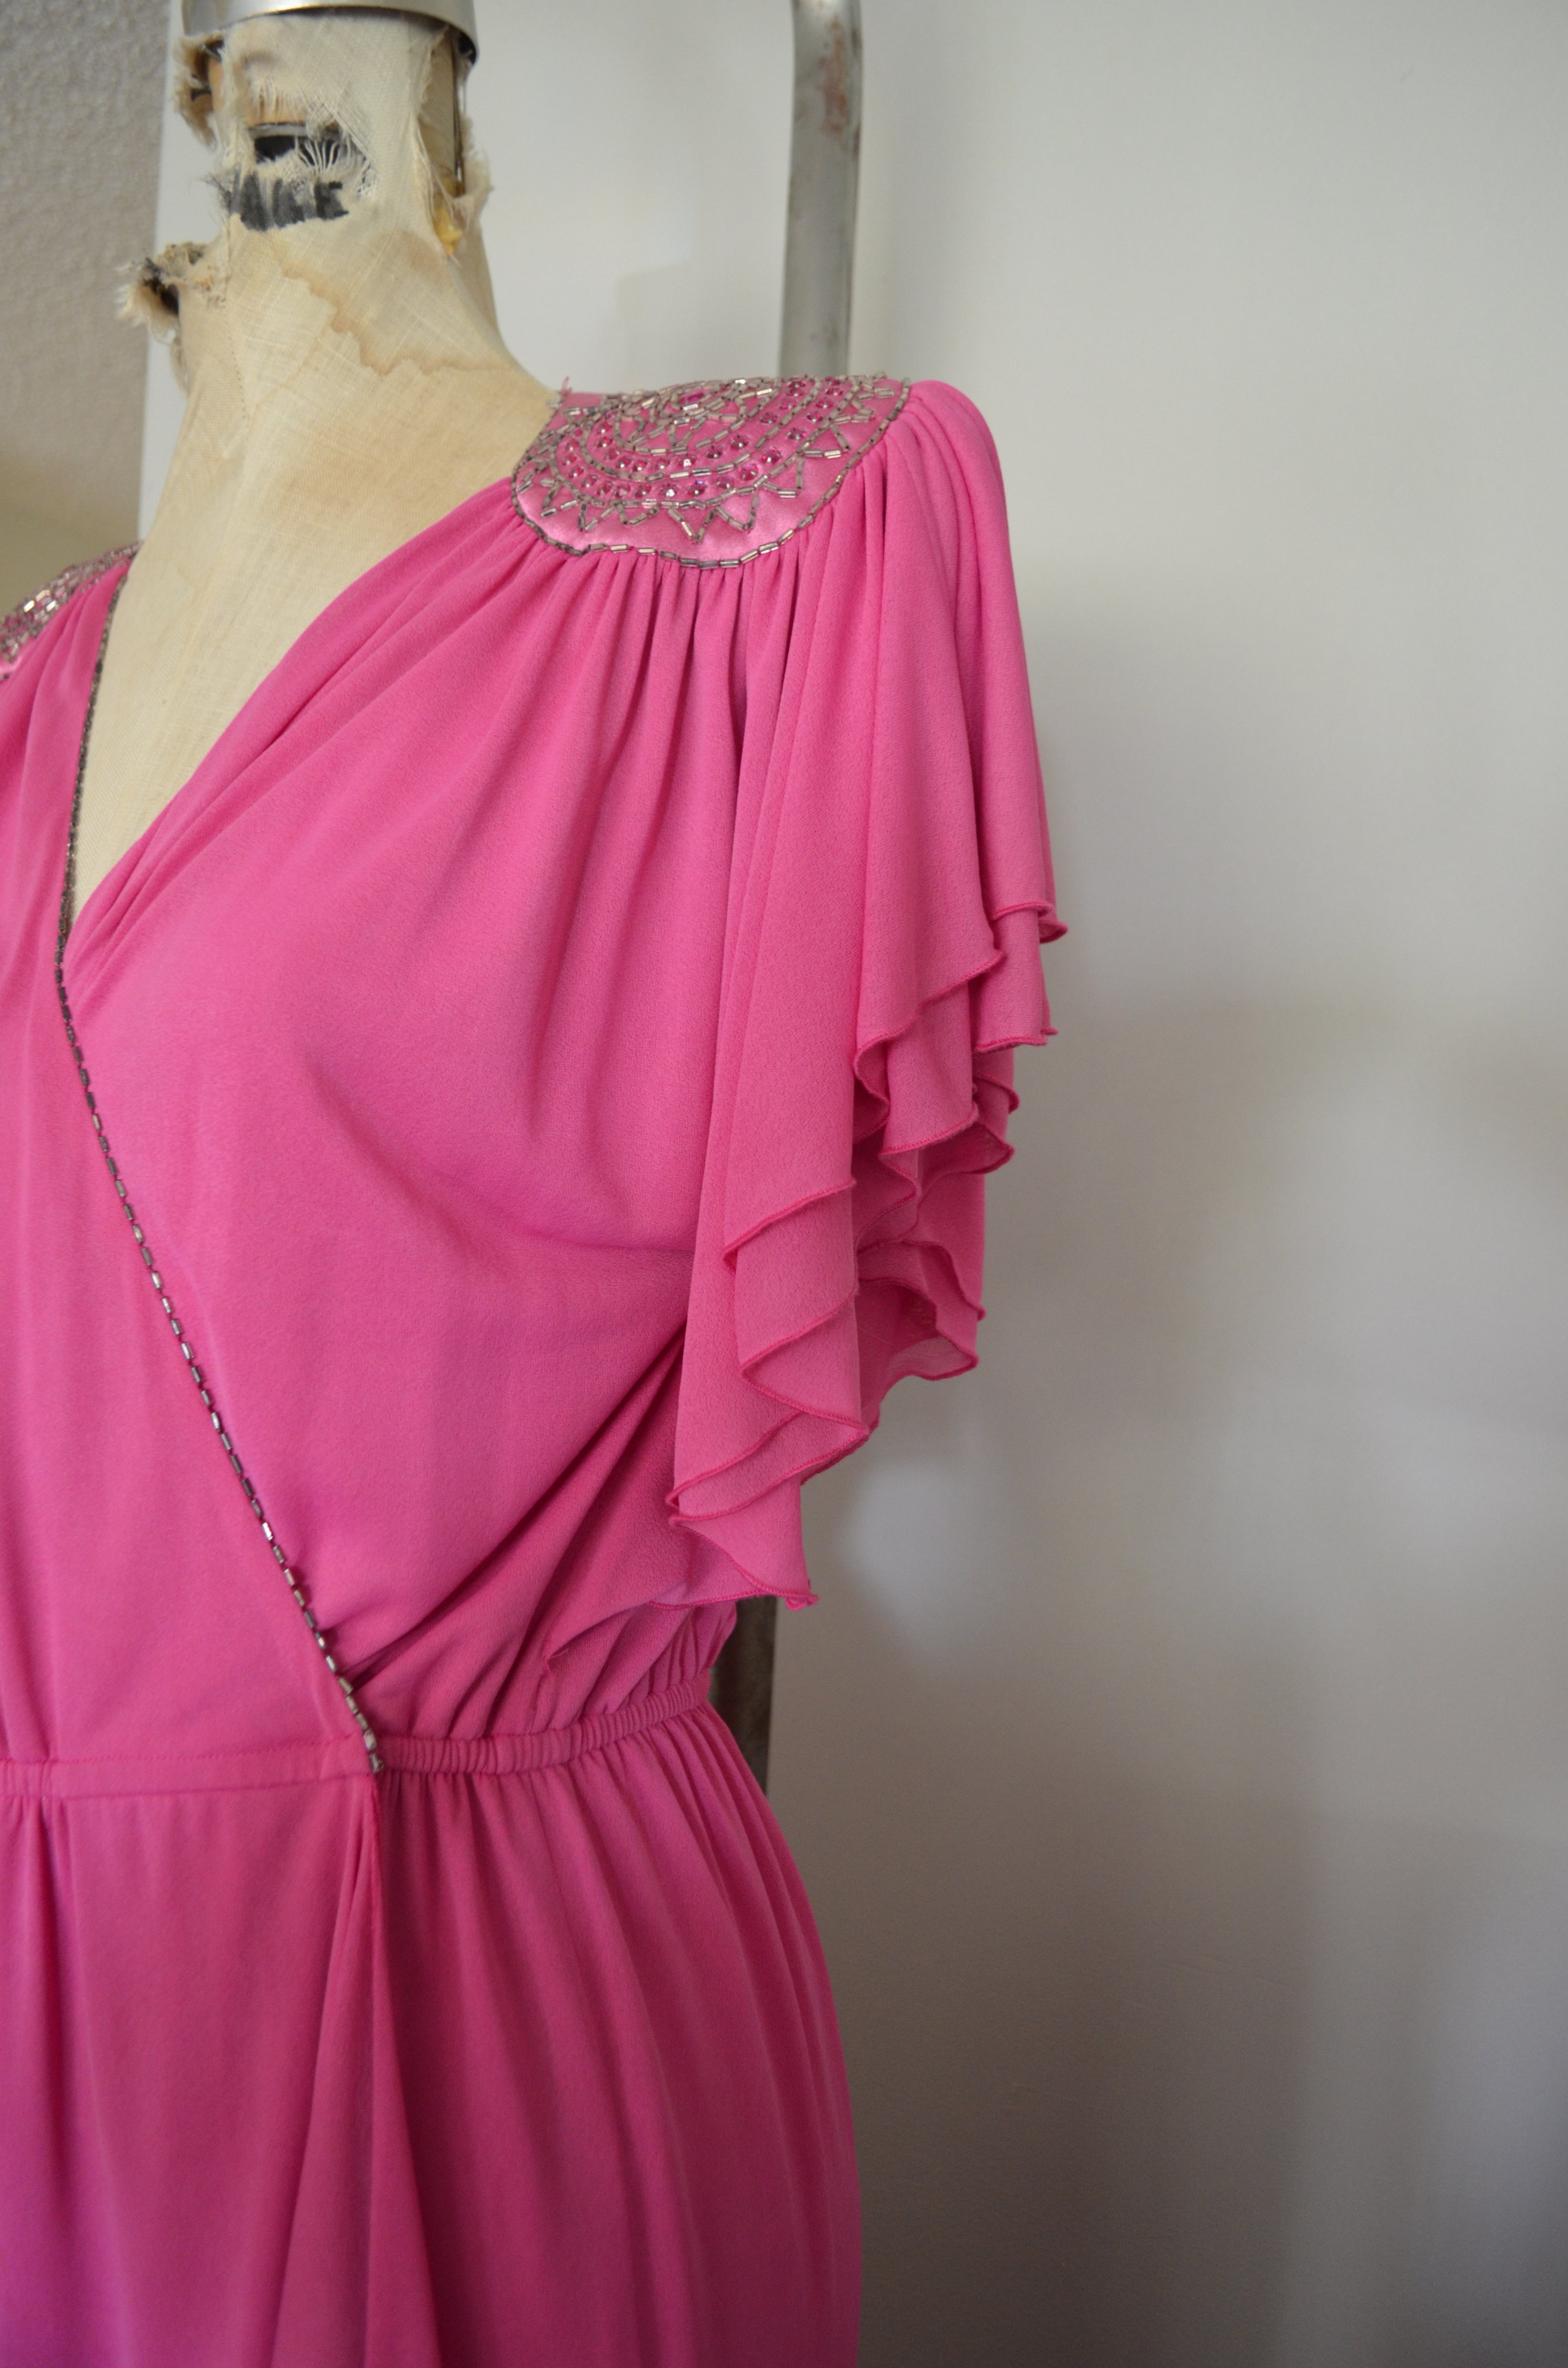 Vintage 70s Lillie Rubin pink wrap dress Goddess Gatsby loungewear glam